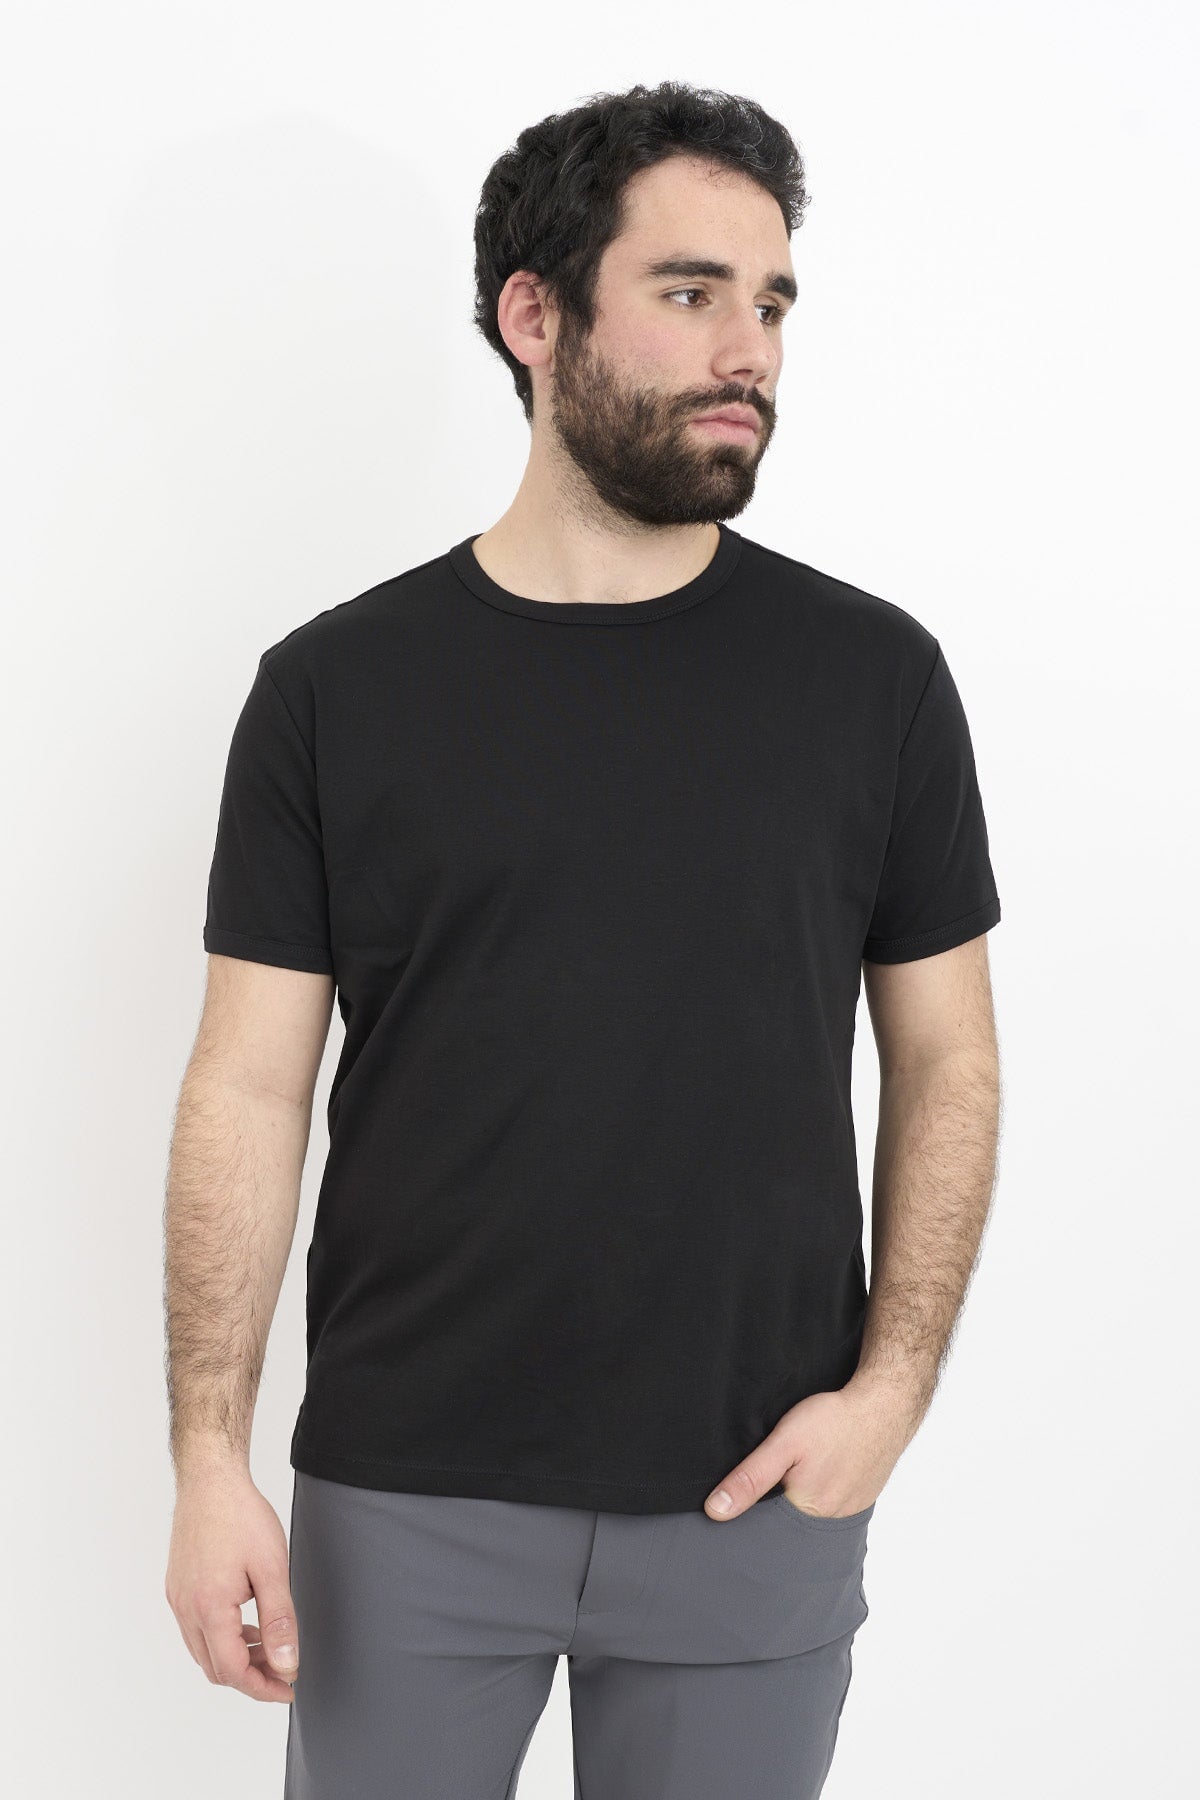 Pima Cool Touch Crew T-Shirt Black